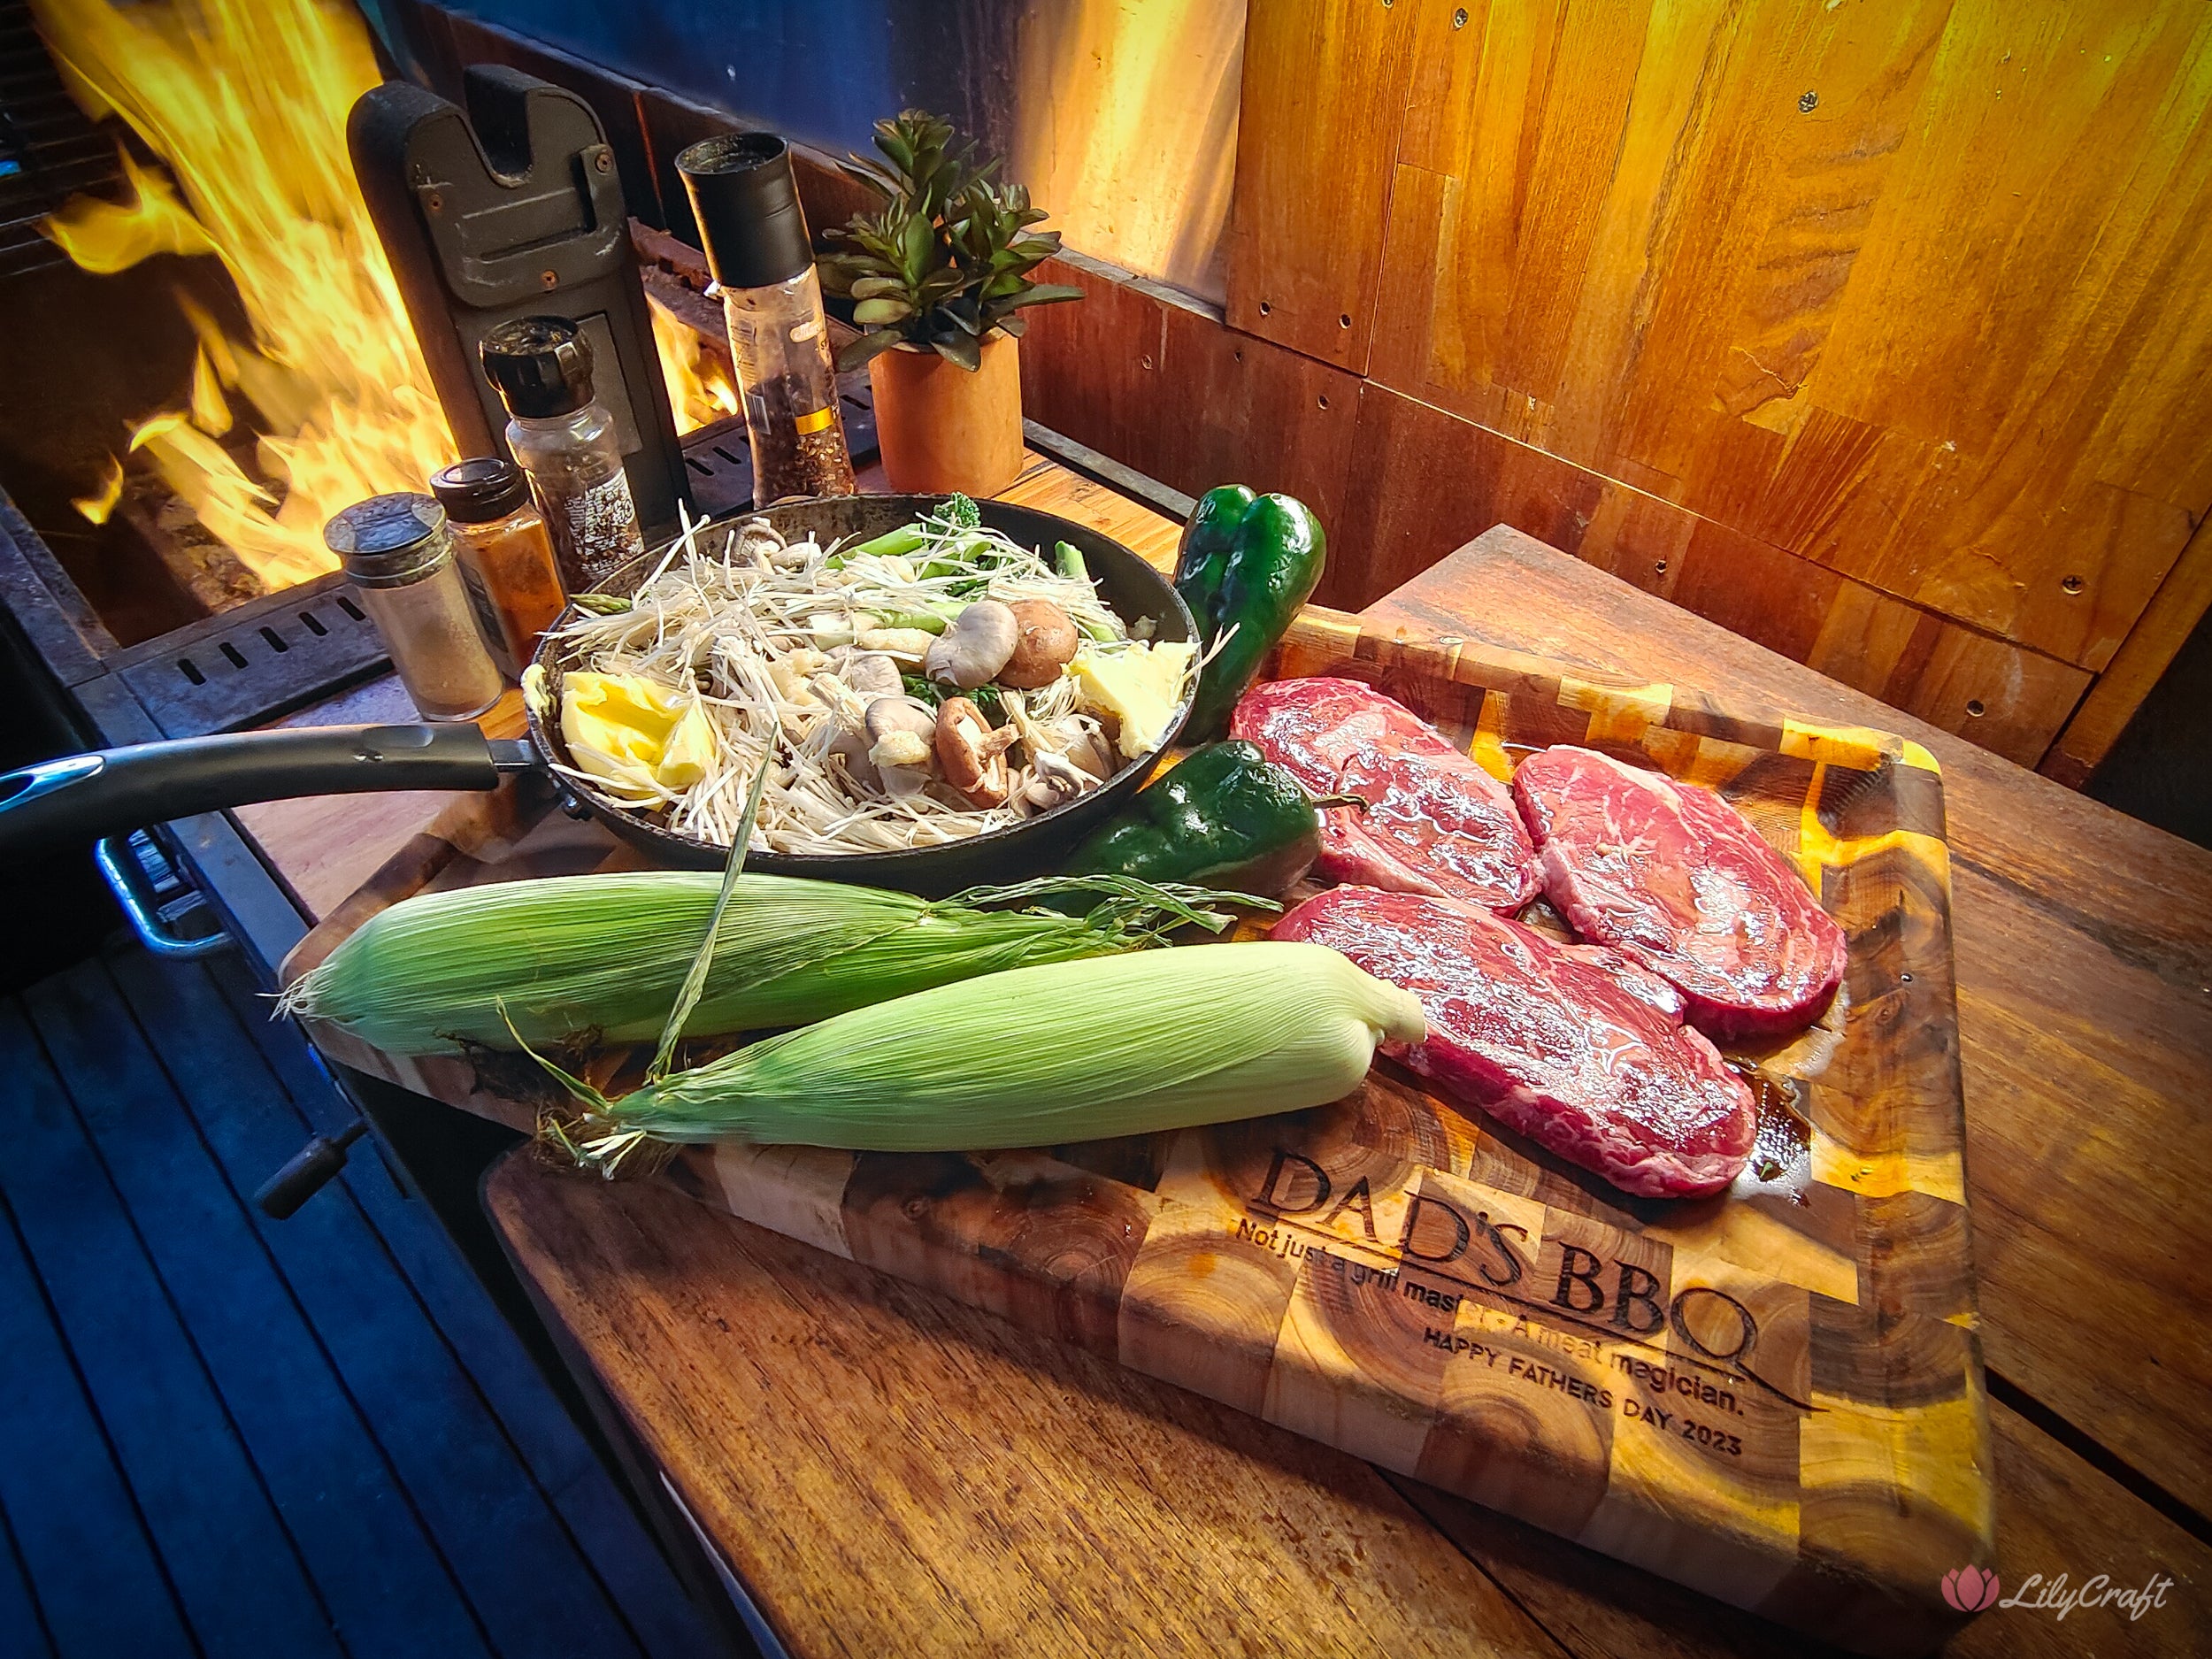 A high-quality endgrain butcher's block BBQ cutting board with expert craftsmanship.